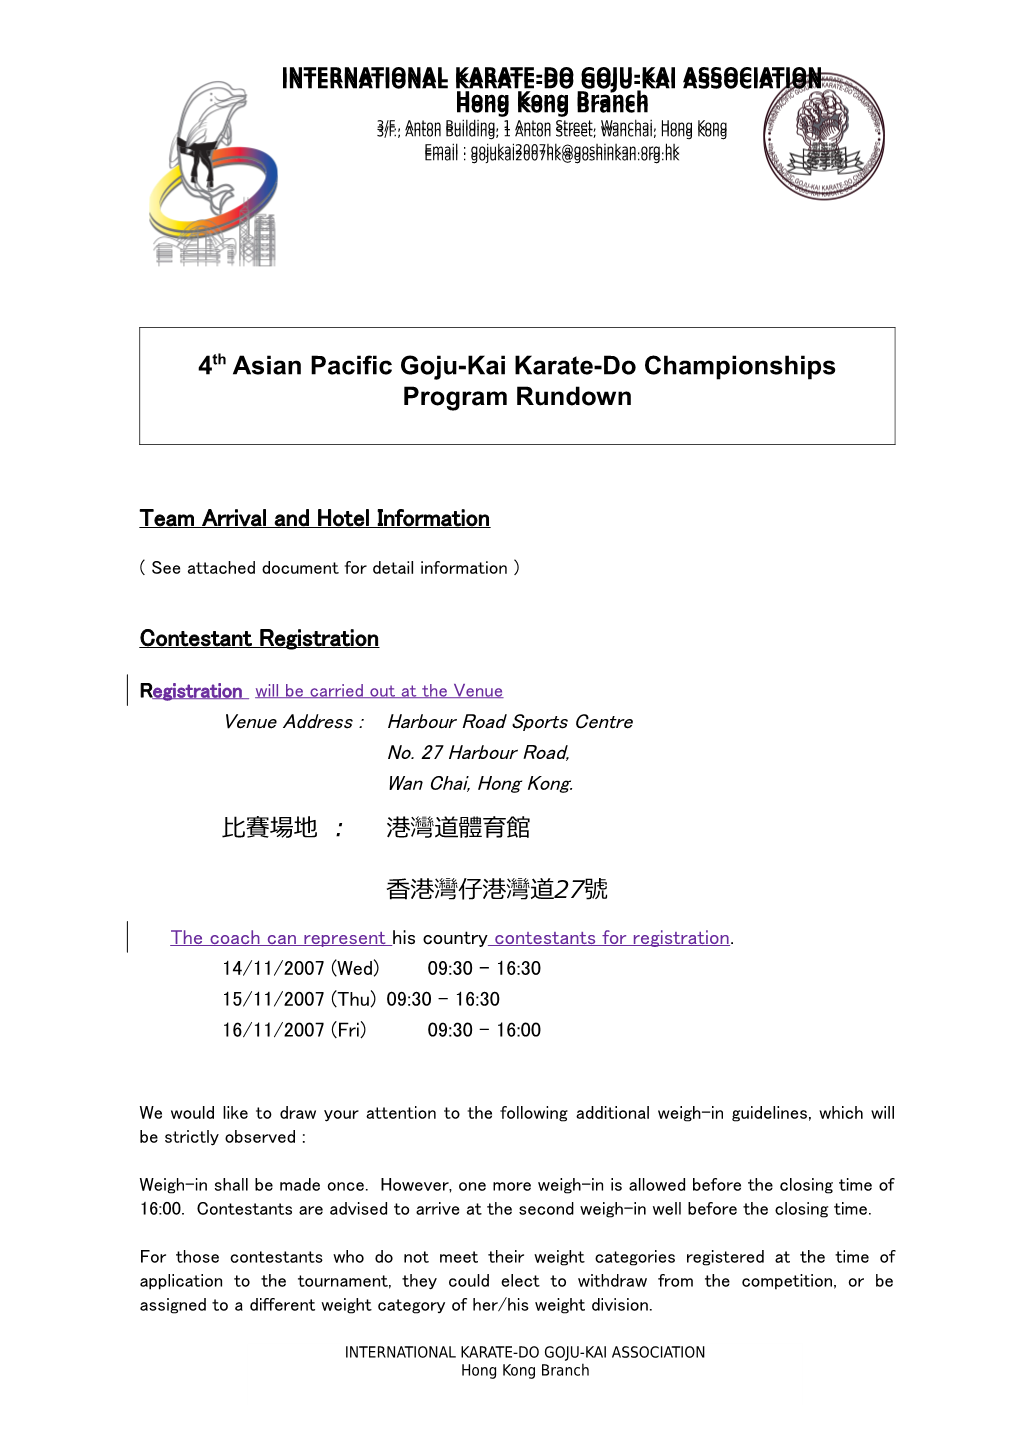 4Th Asian Pacific Goju-Kai Karate-Do Championship